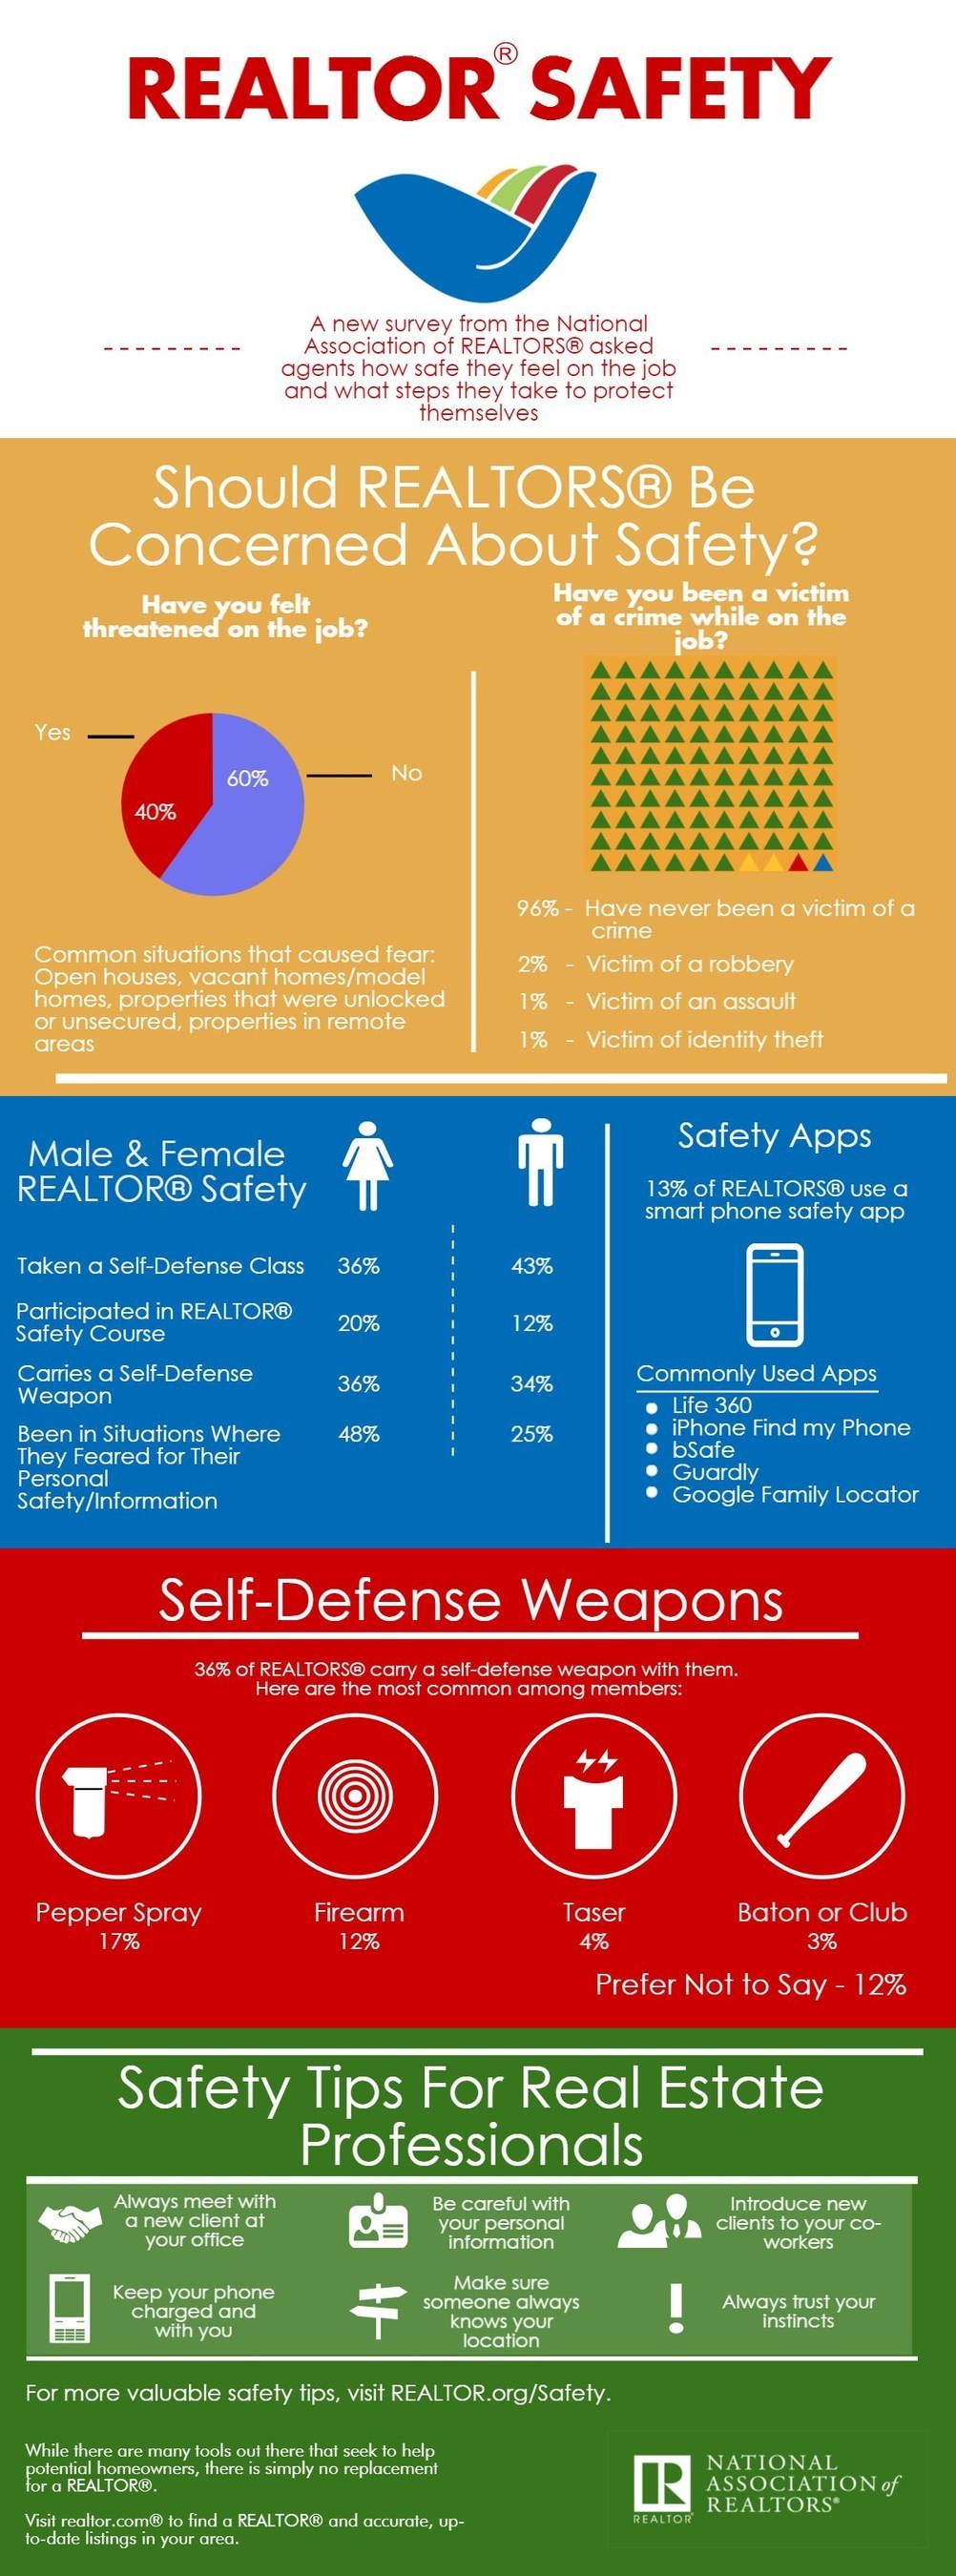 nar realtors feel safe infograph